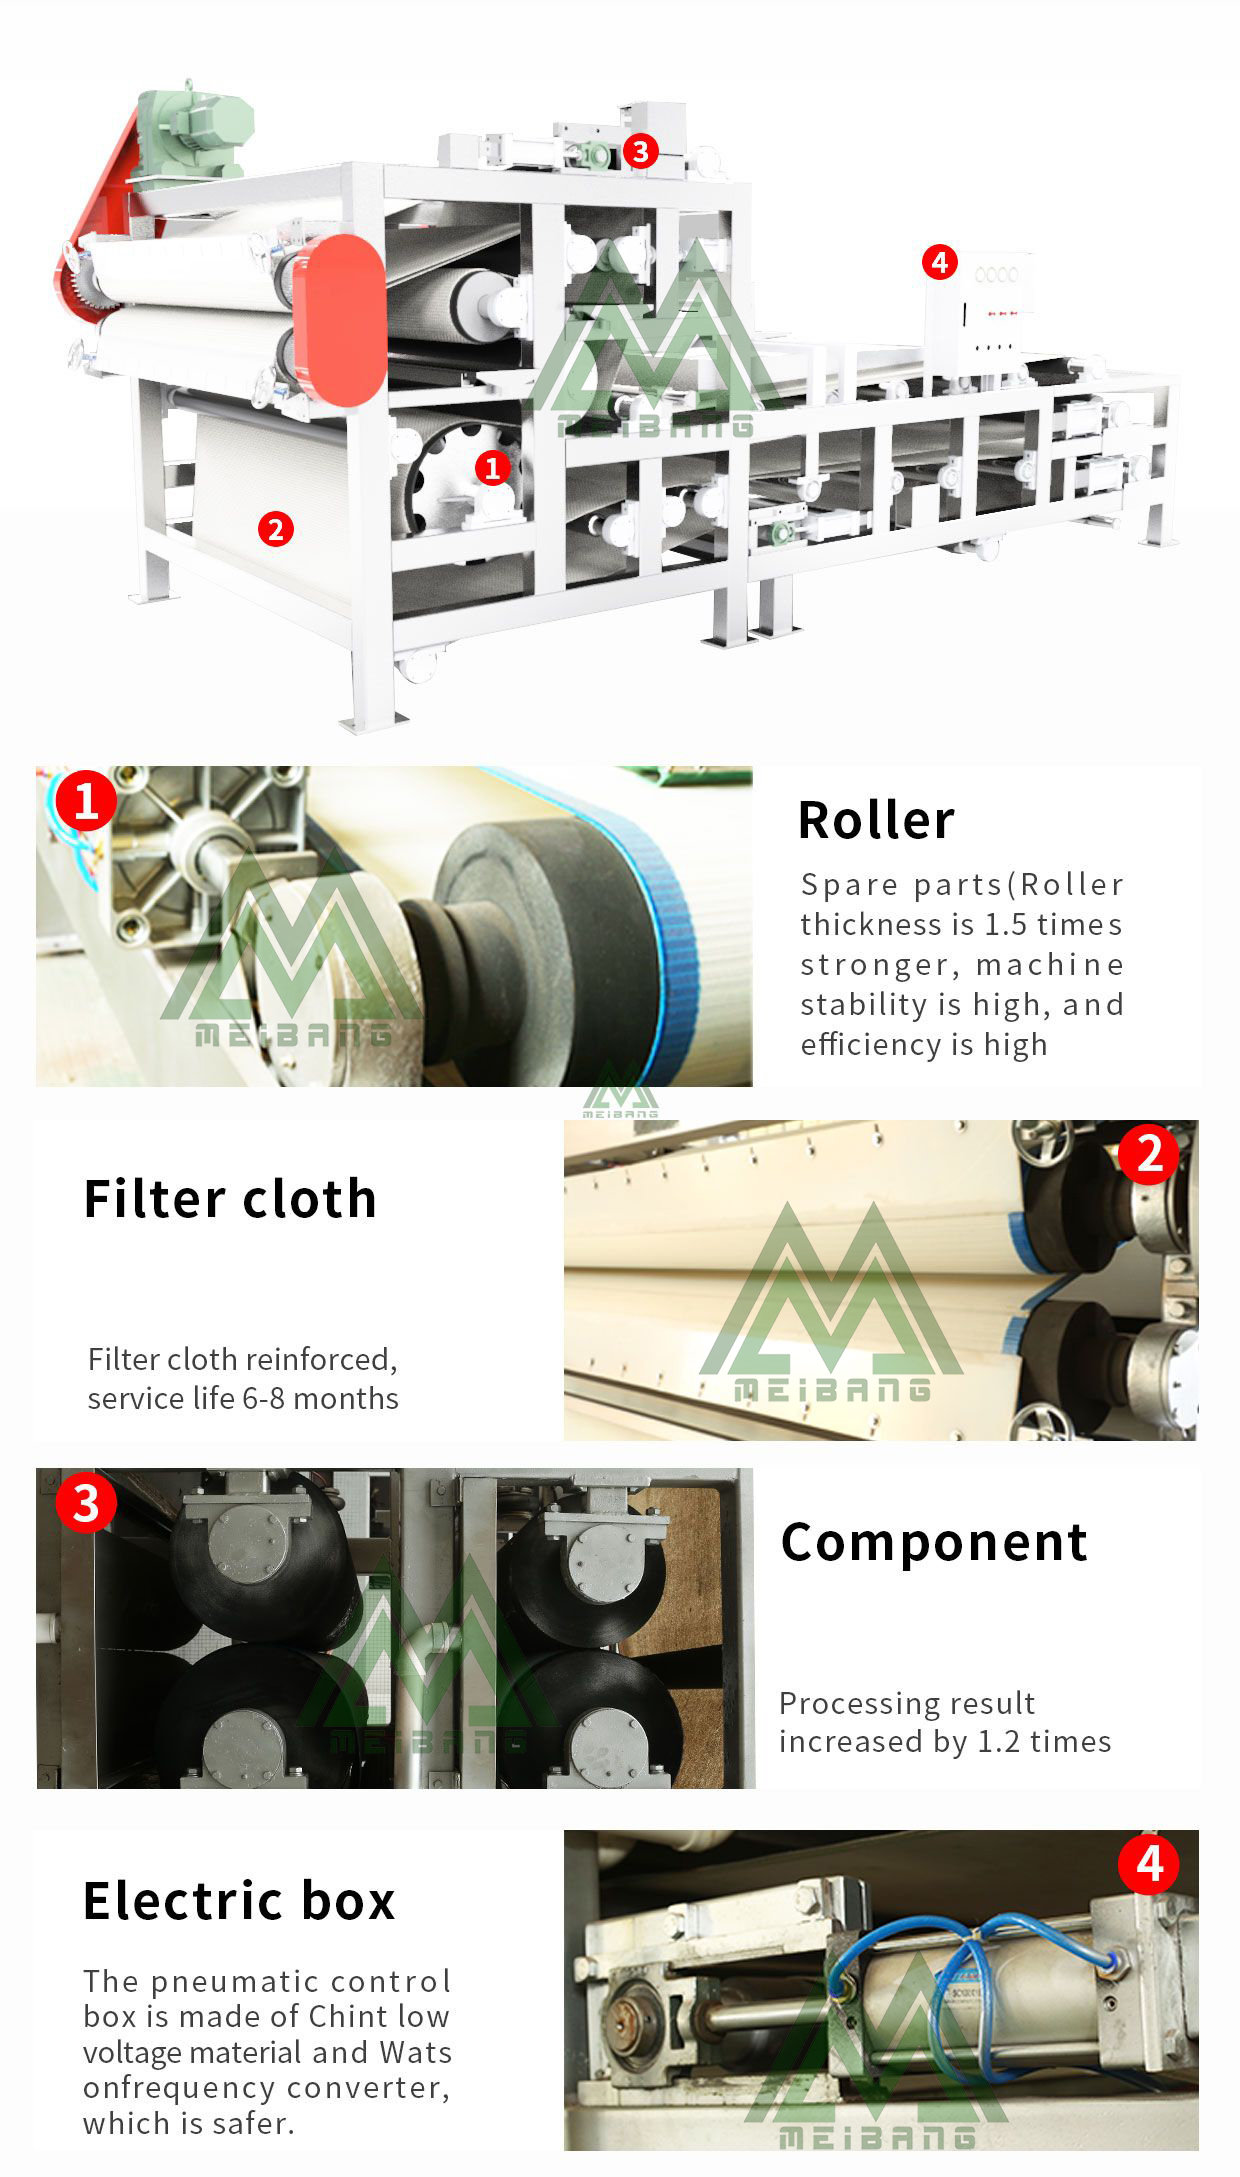 Belt filter press